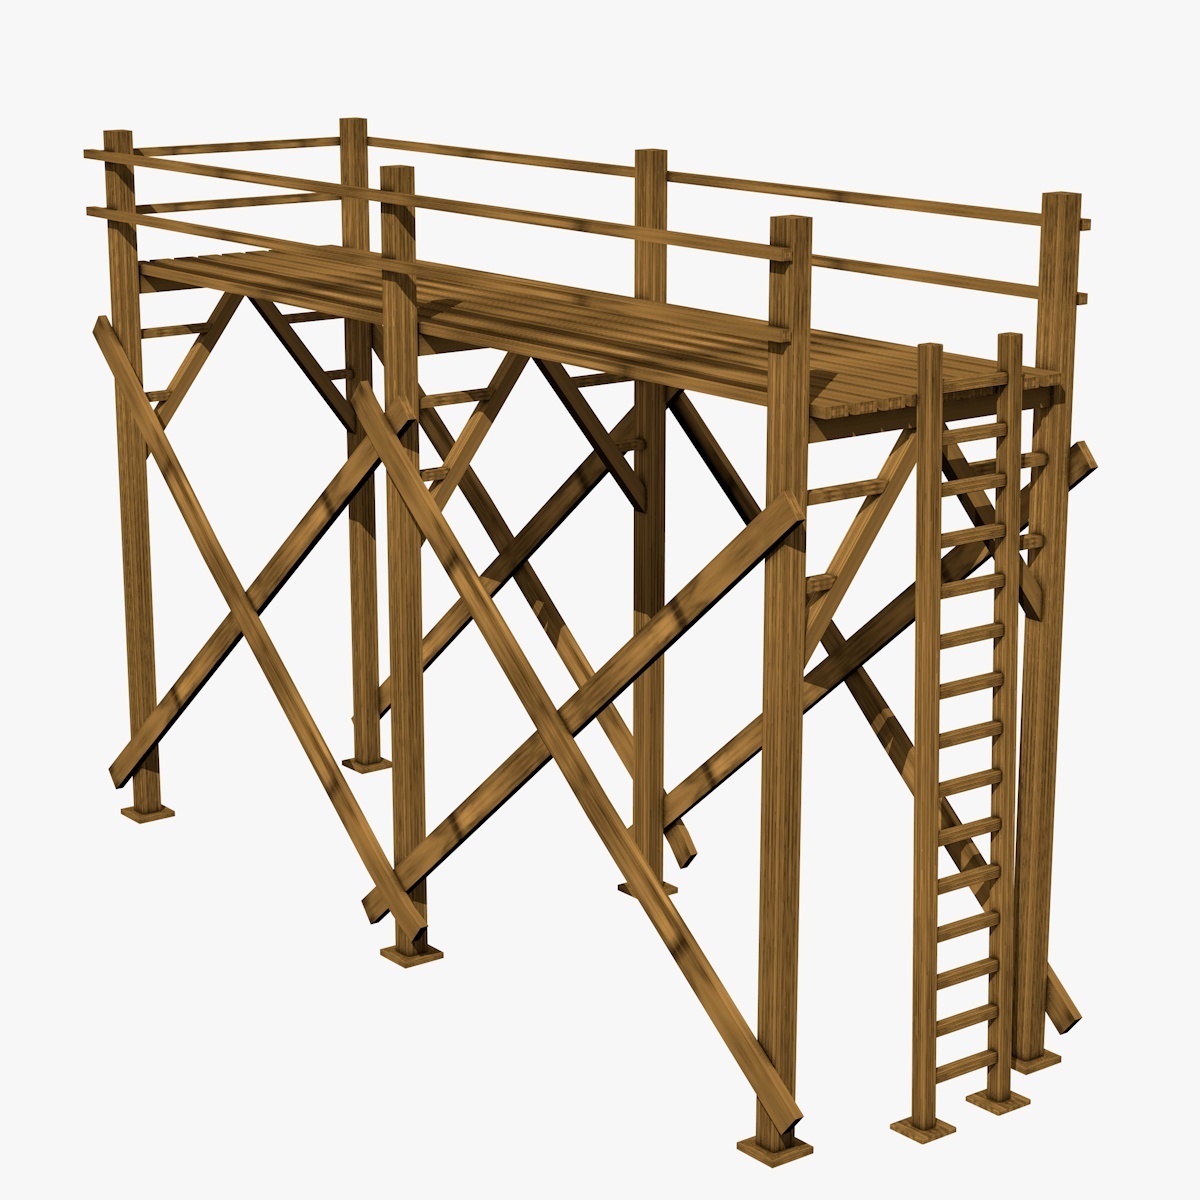 Wood scaffolding